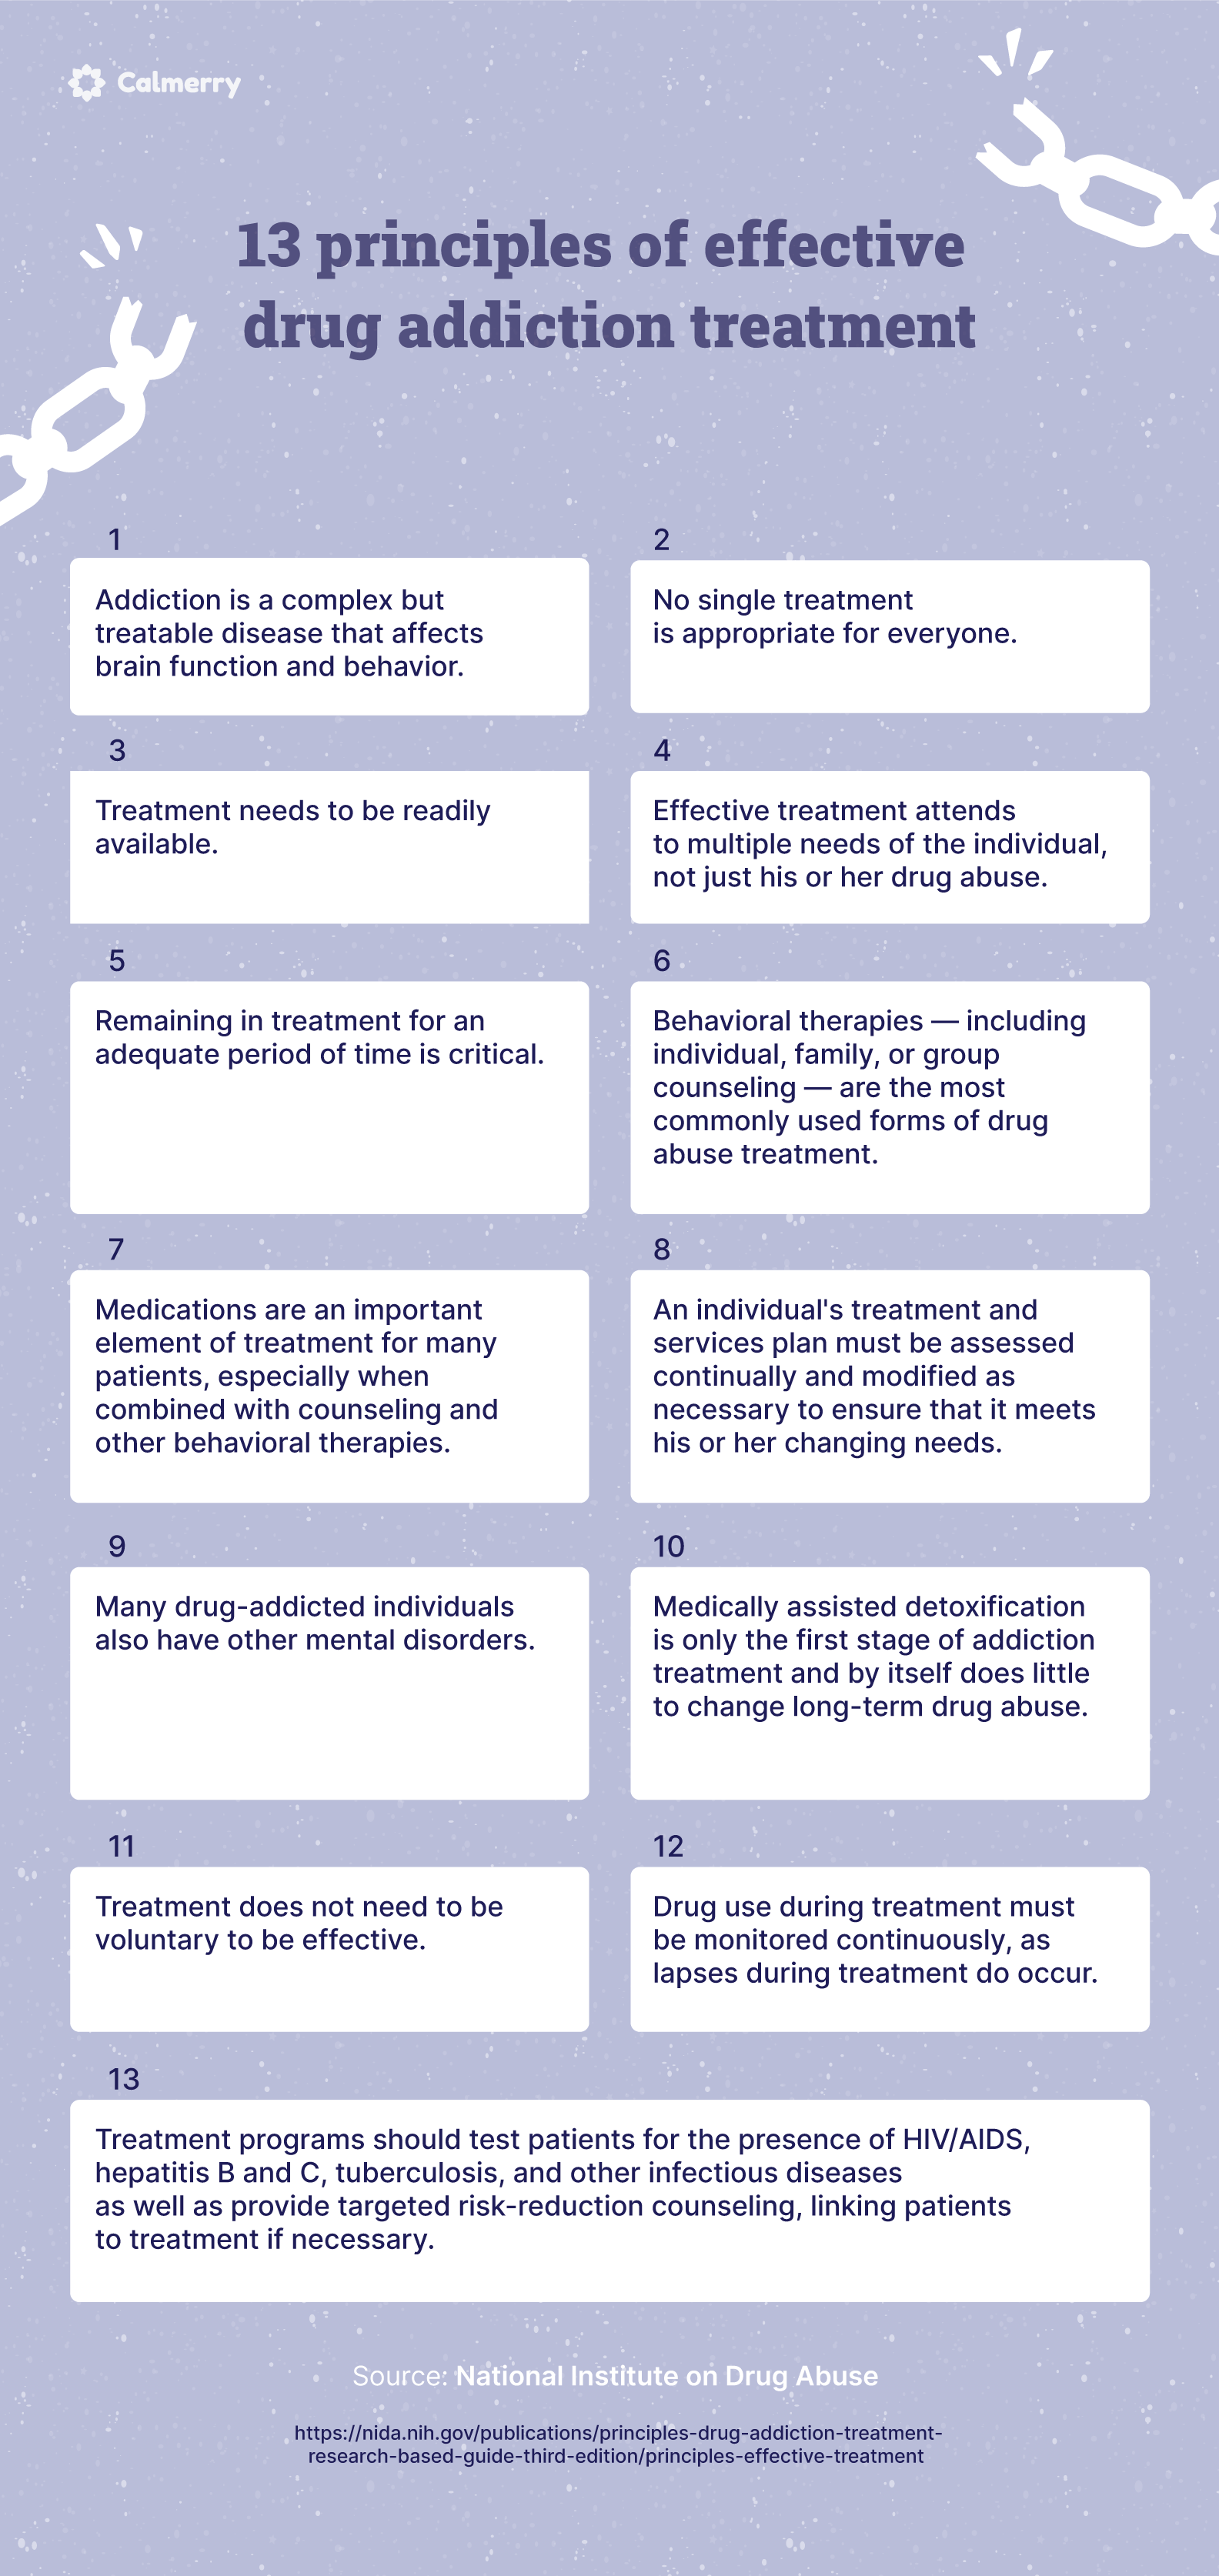 13 principles of effective drug addiction treatment